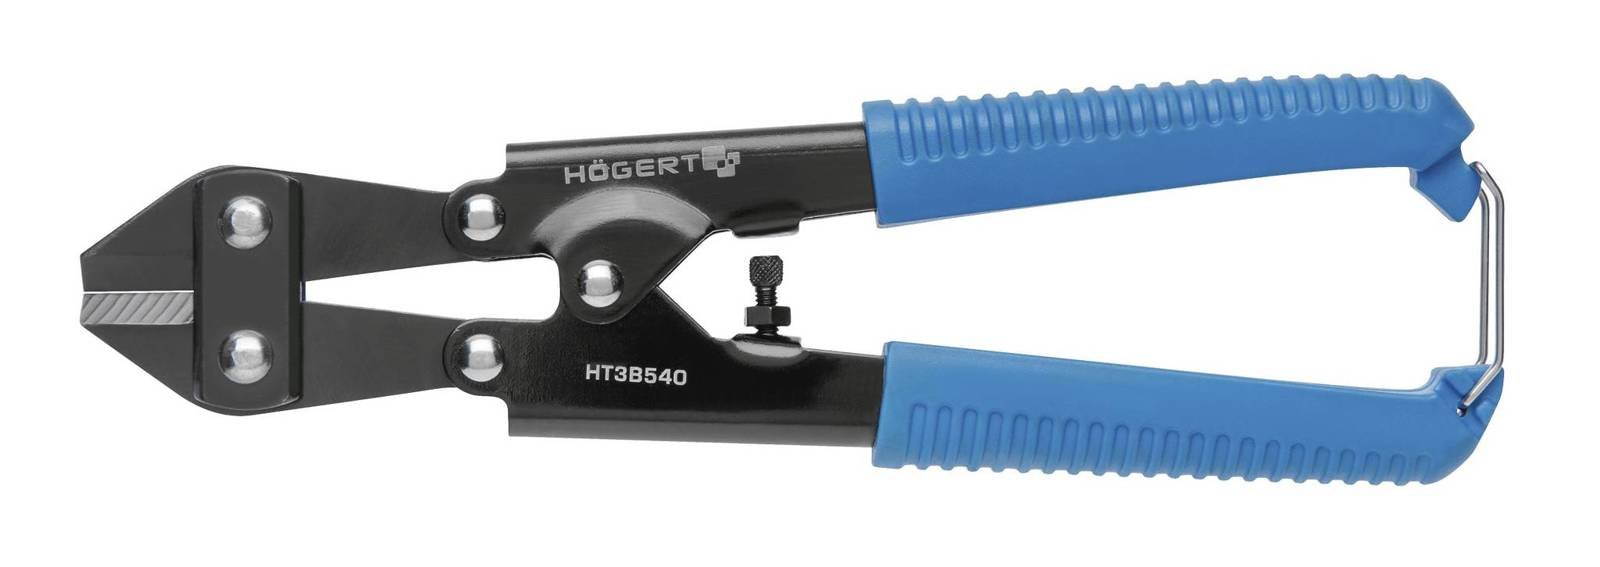 Hogert HT3B540 Mini nożyce do drutu 210 mm  